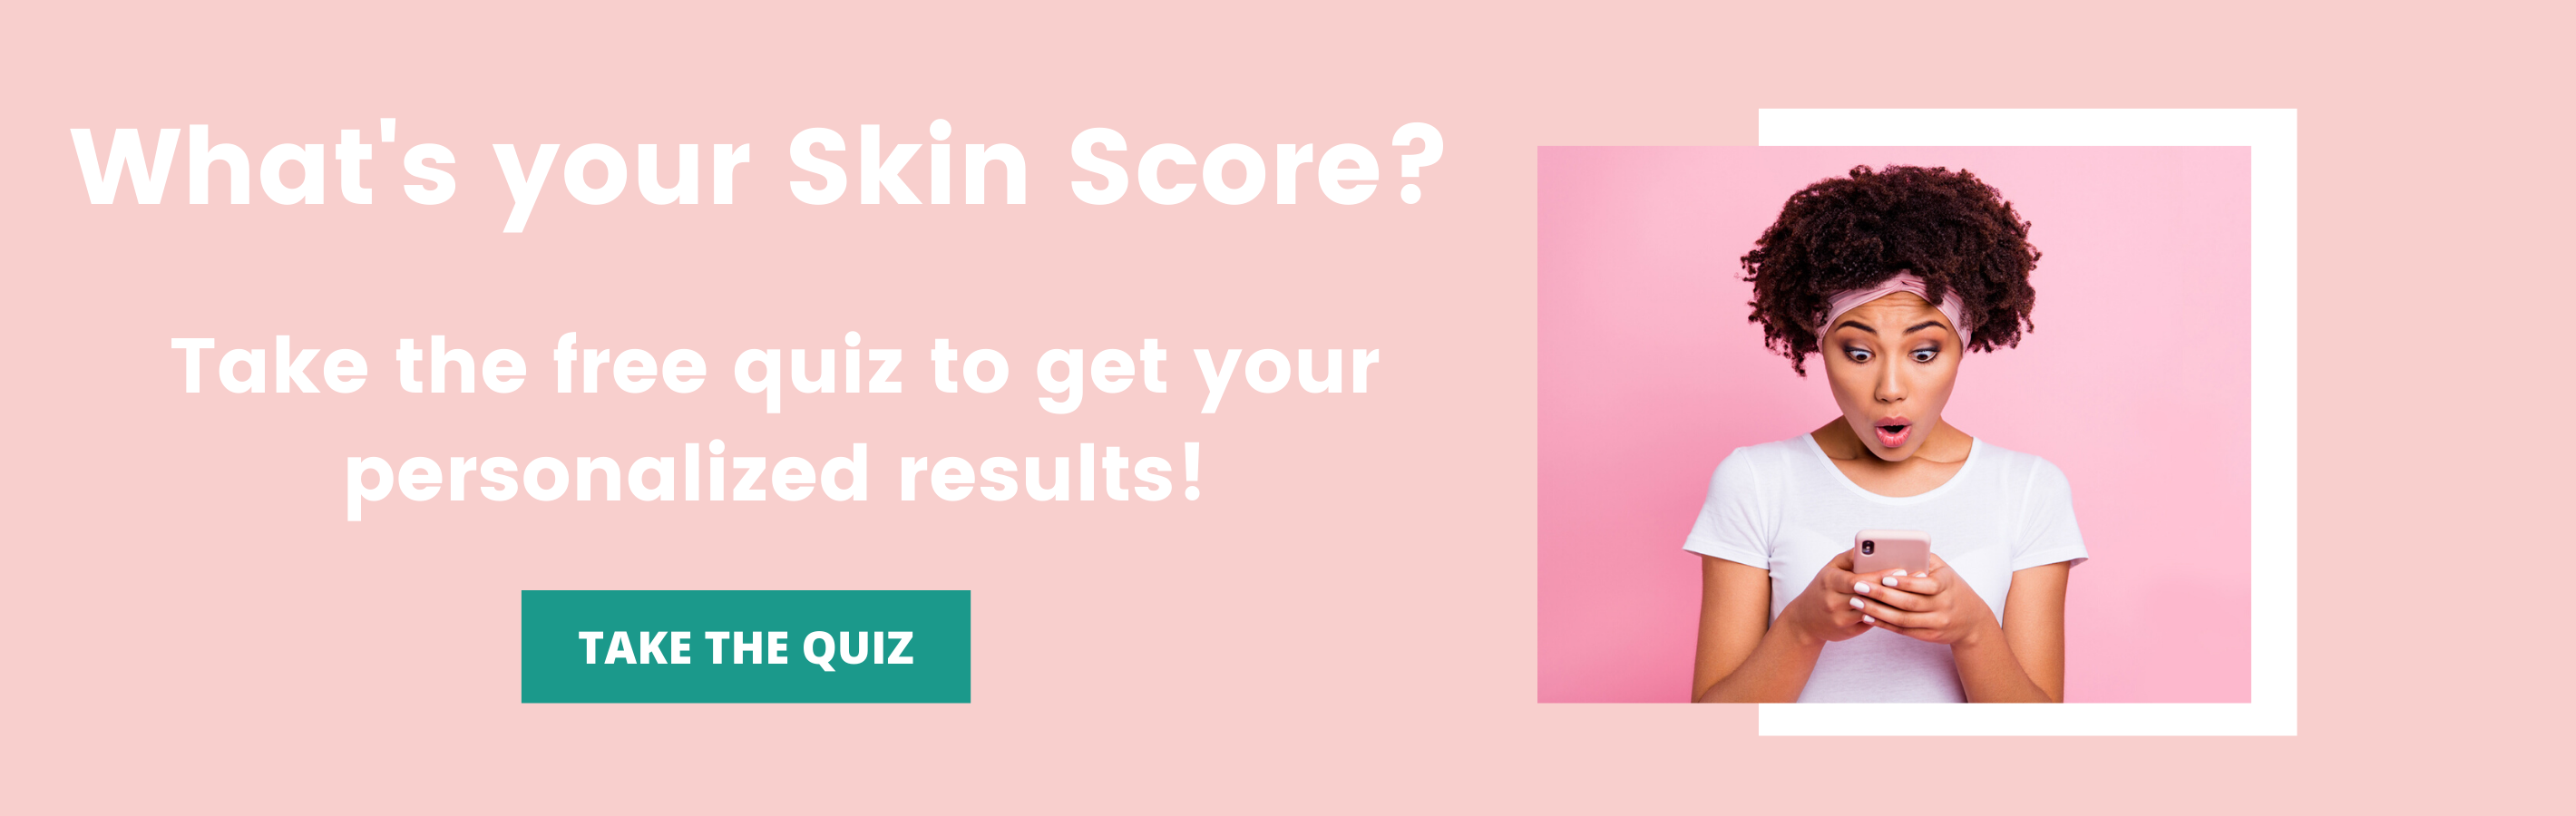 Pregnancy Skin Score Quiz